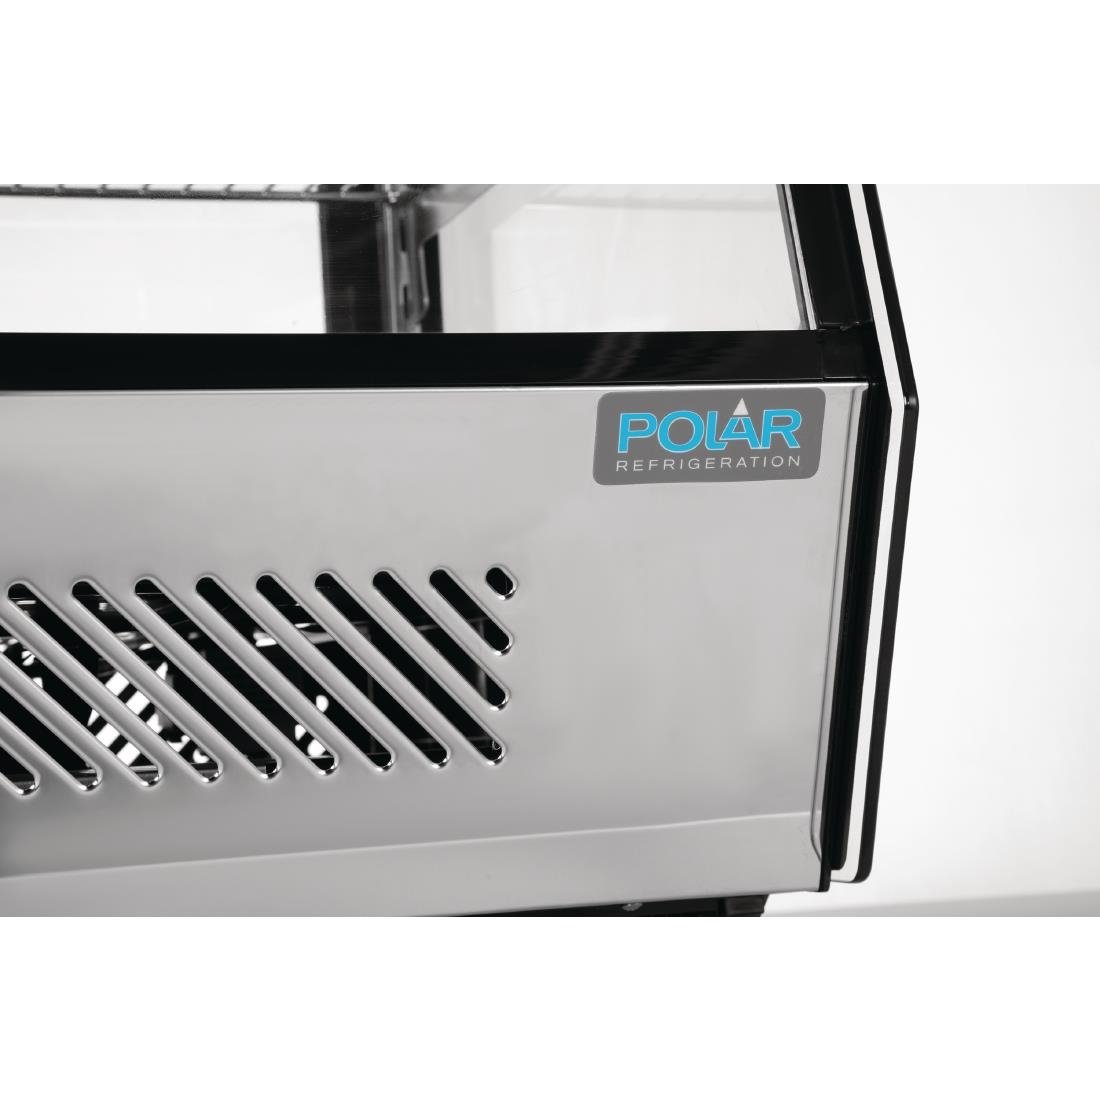 GP291 Polar G-Series Energy Efficient Countertop Food Display Fridge Black 160Ltr